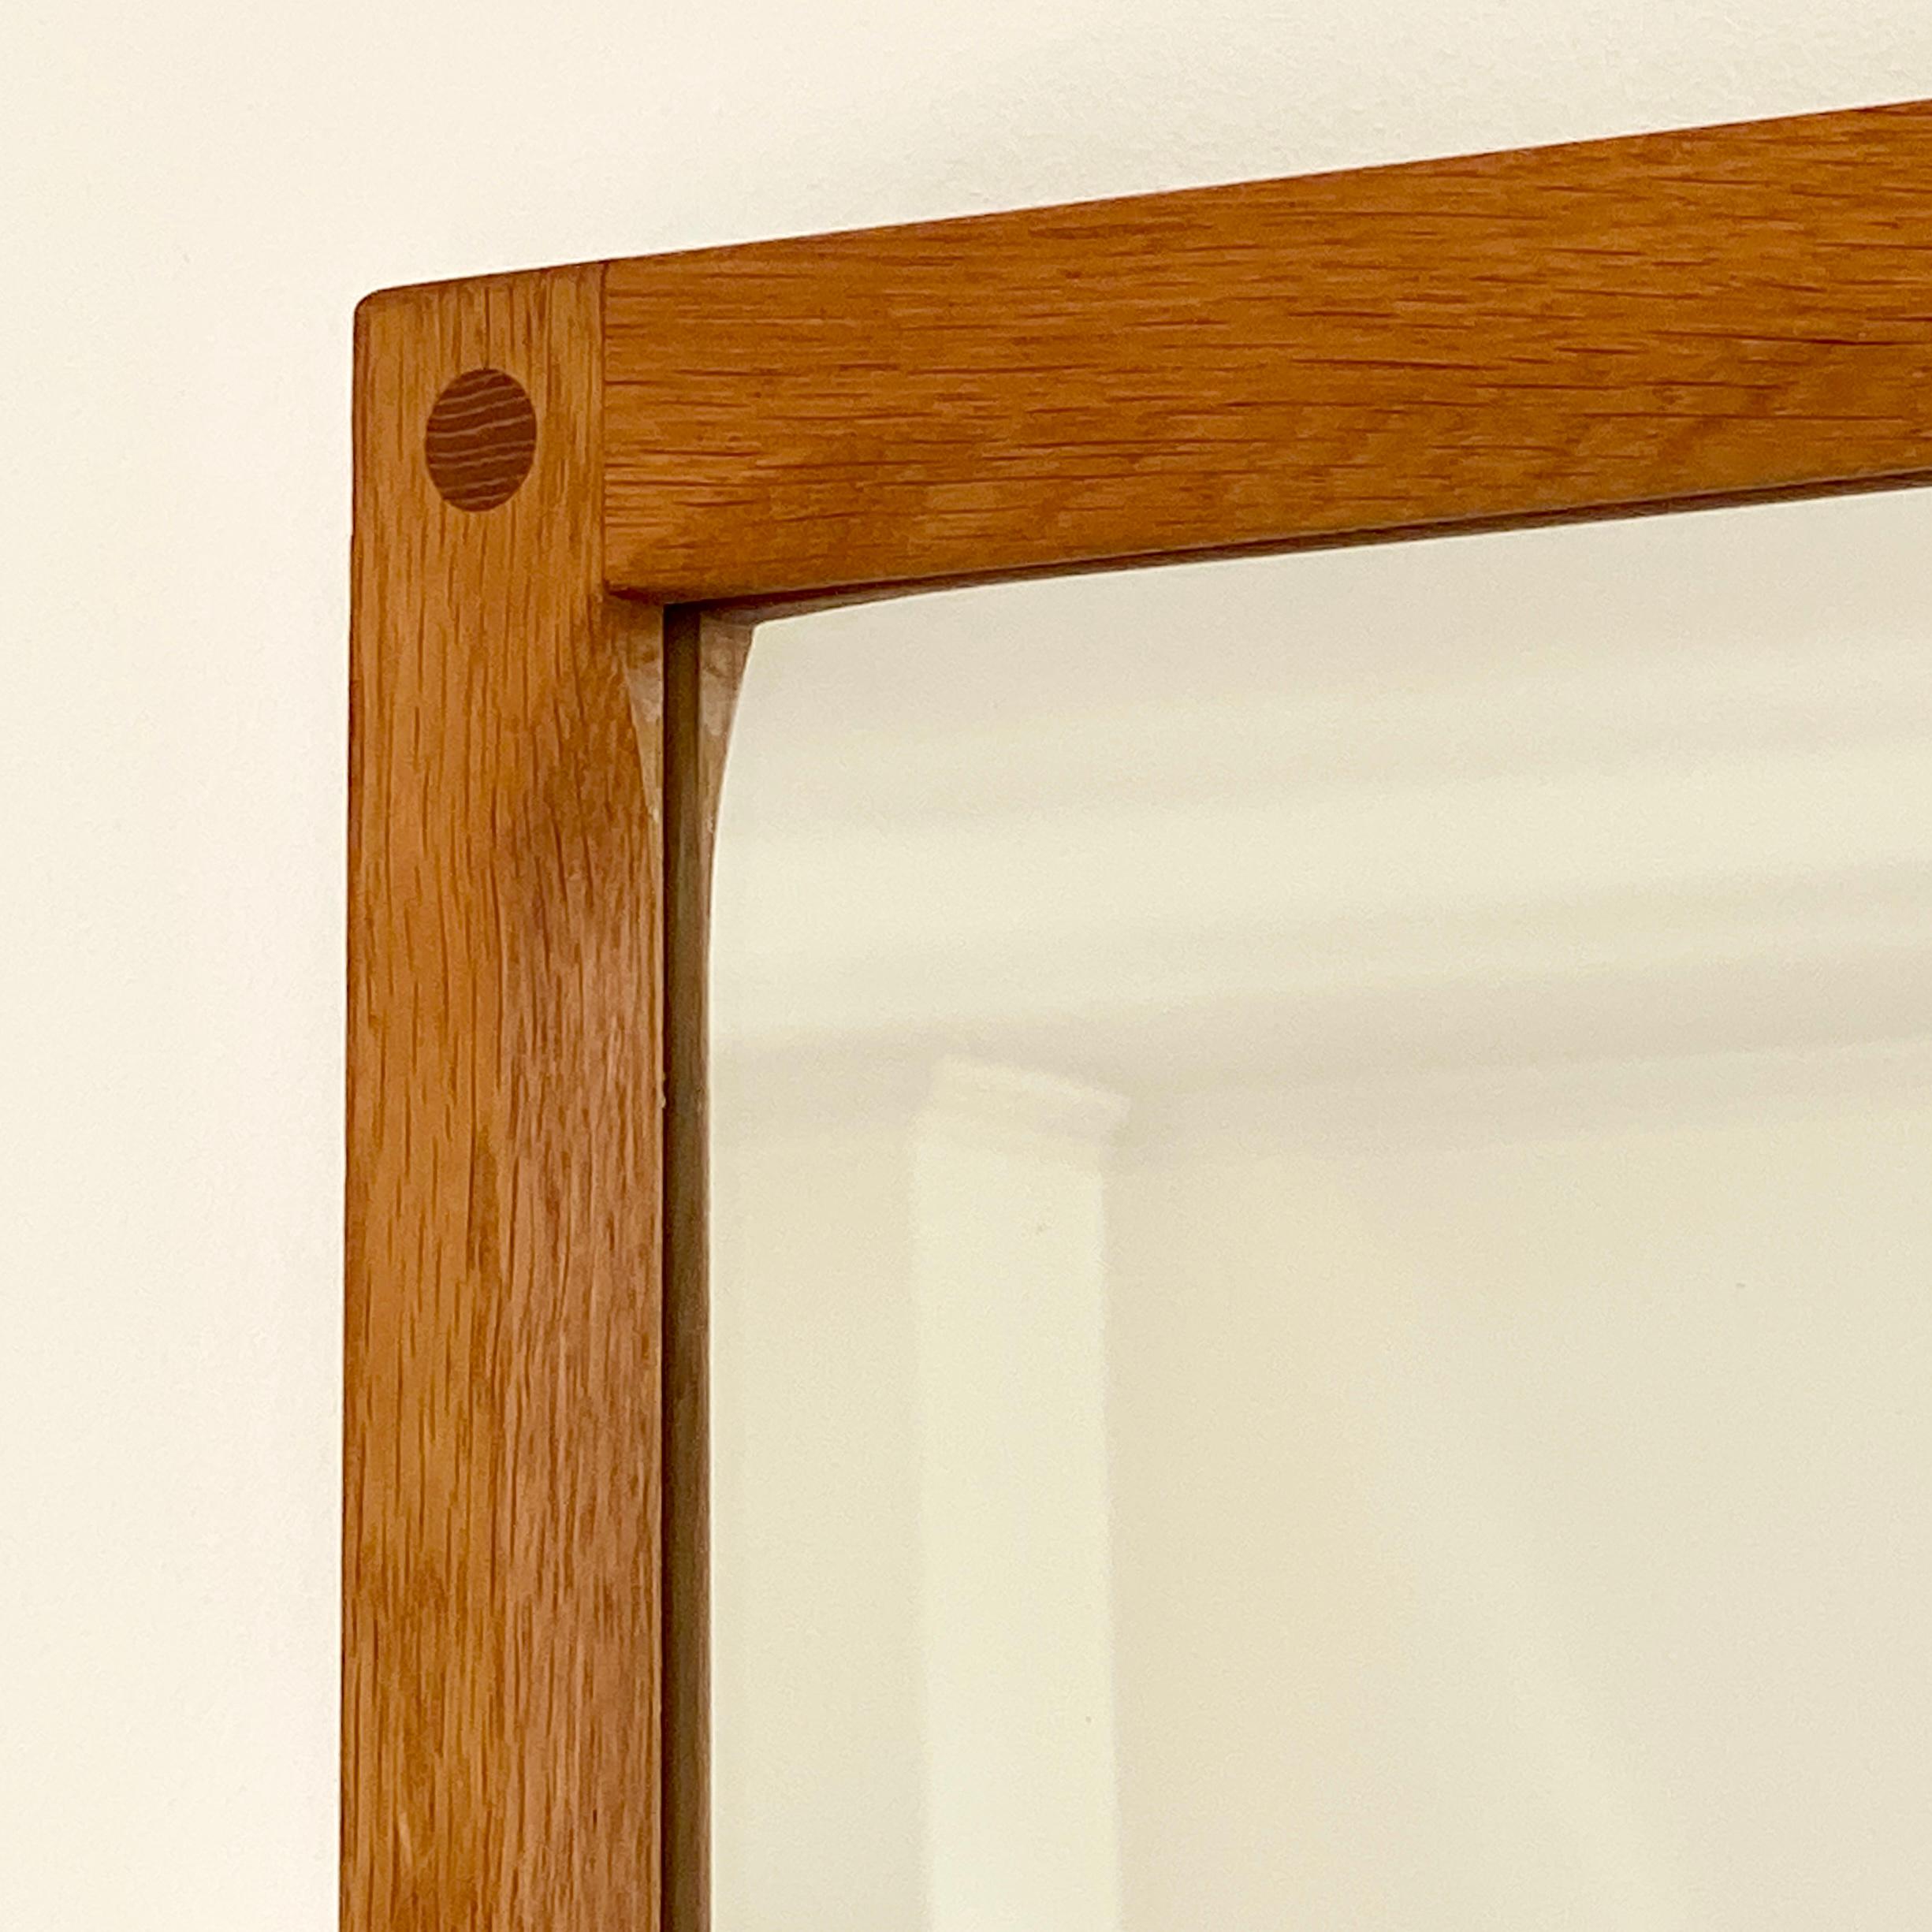 Hand-Crafted Danish Rectangular Oak and Teak Mirror by Kai Kristiansen for Aksel Kjersgaard For Sale